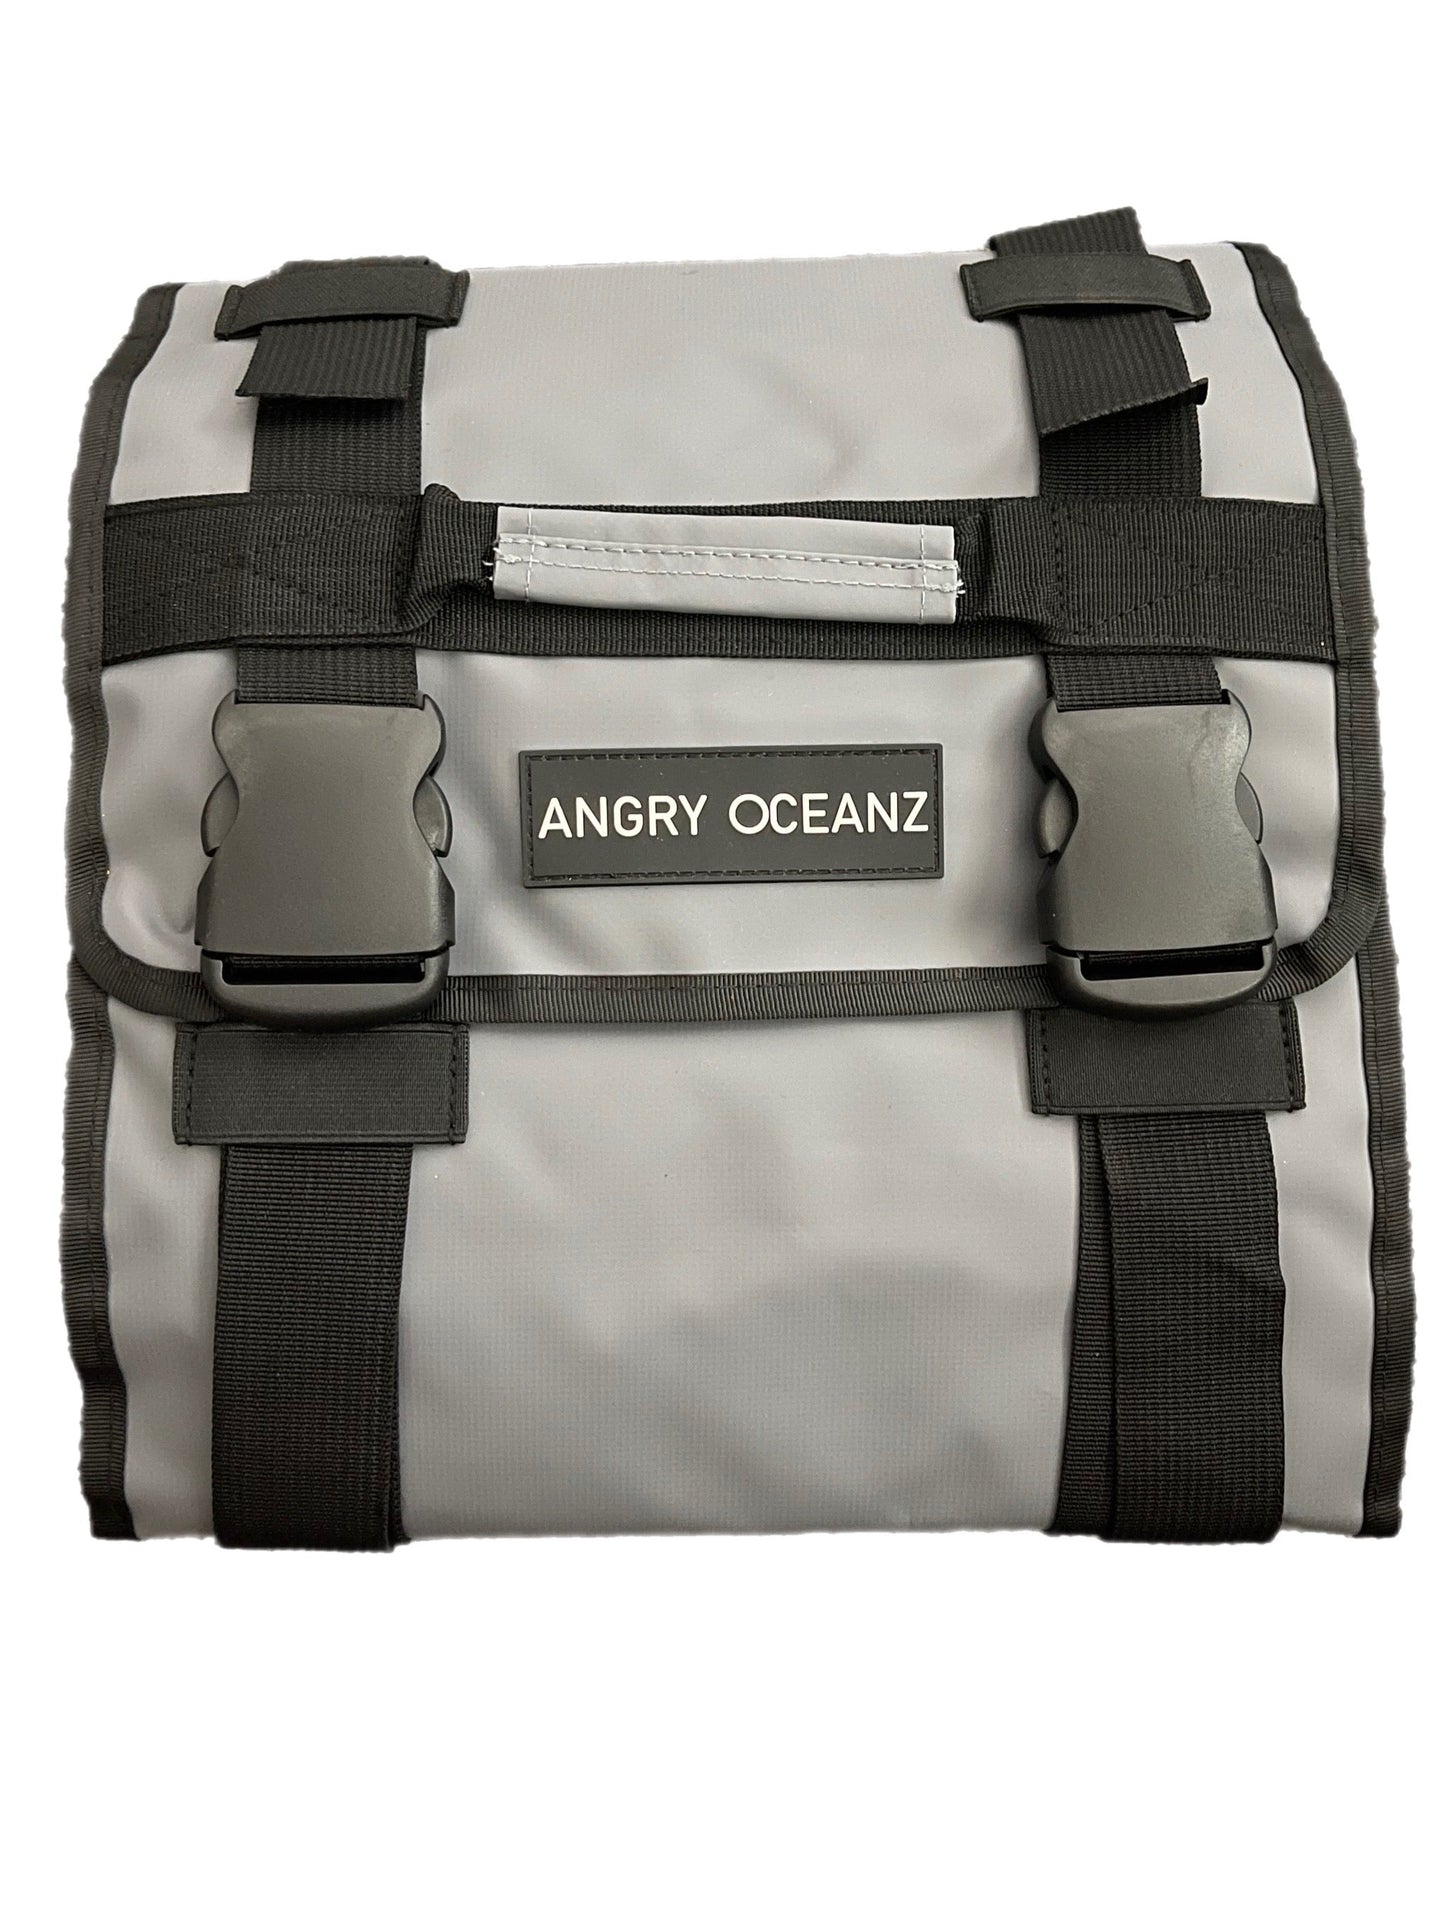 Angry Oceanz Ultimate Storage Bundle